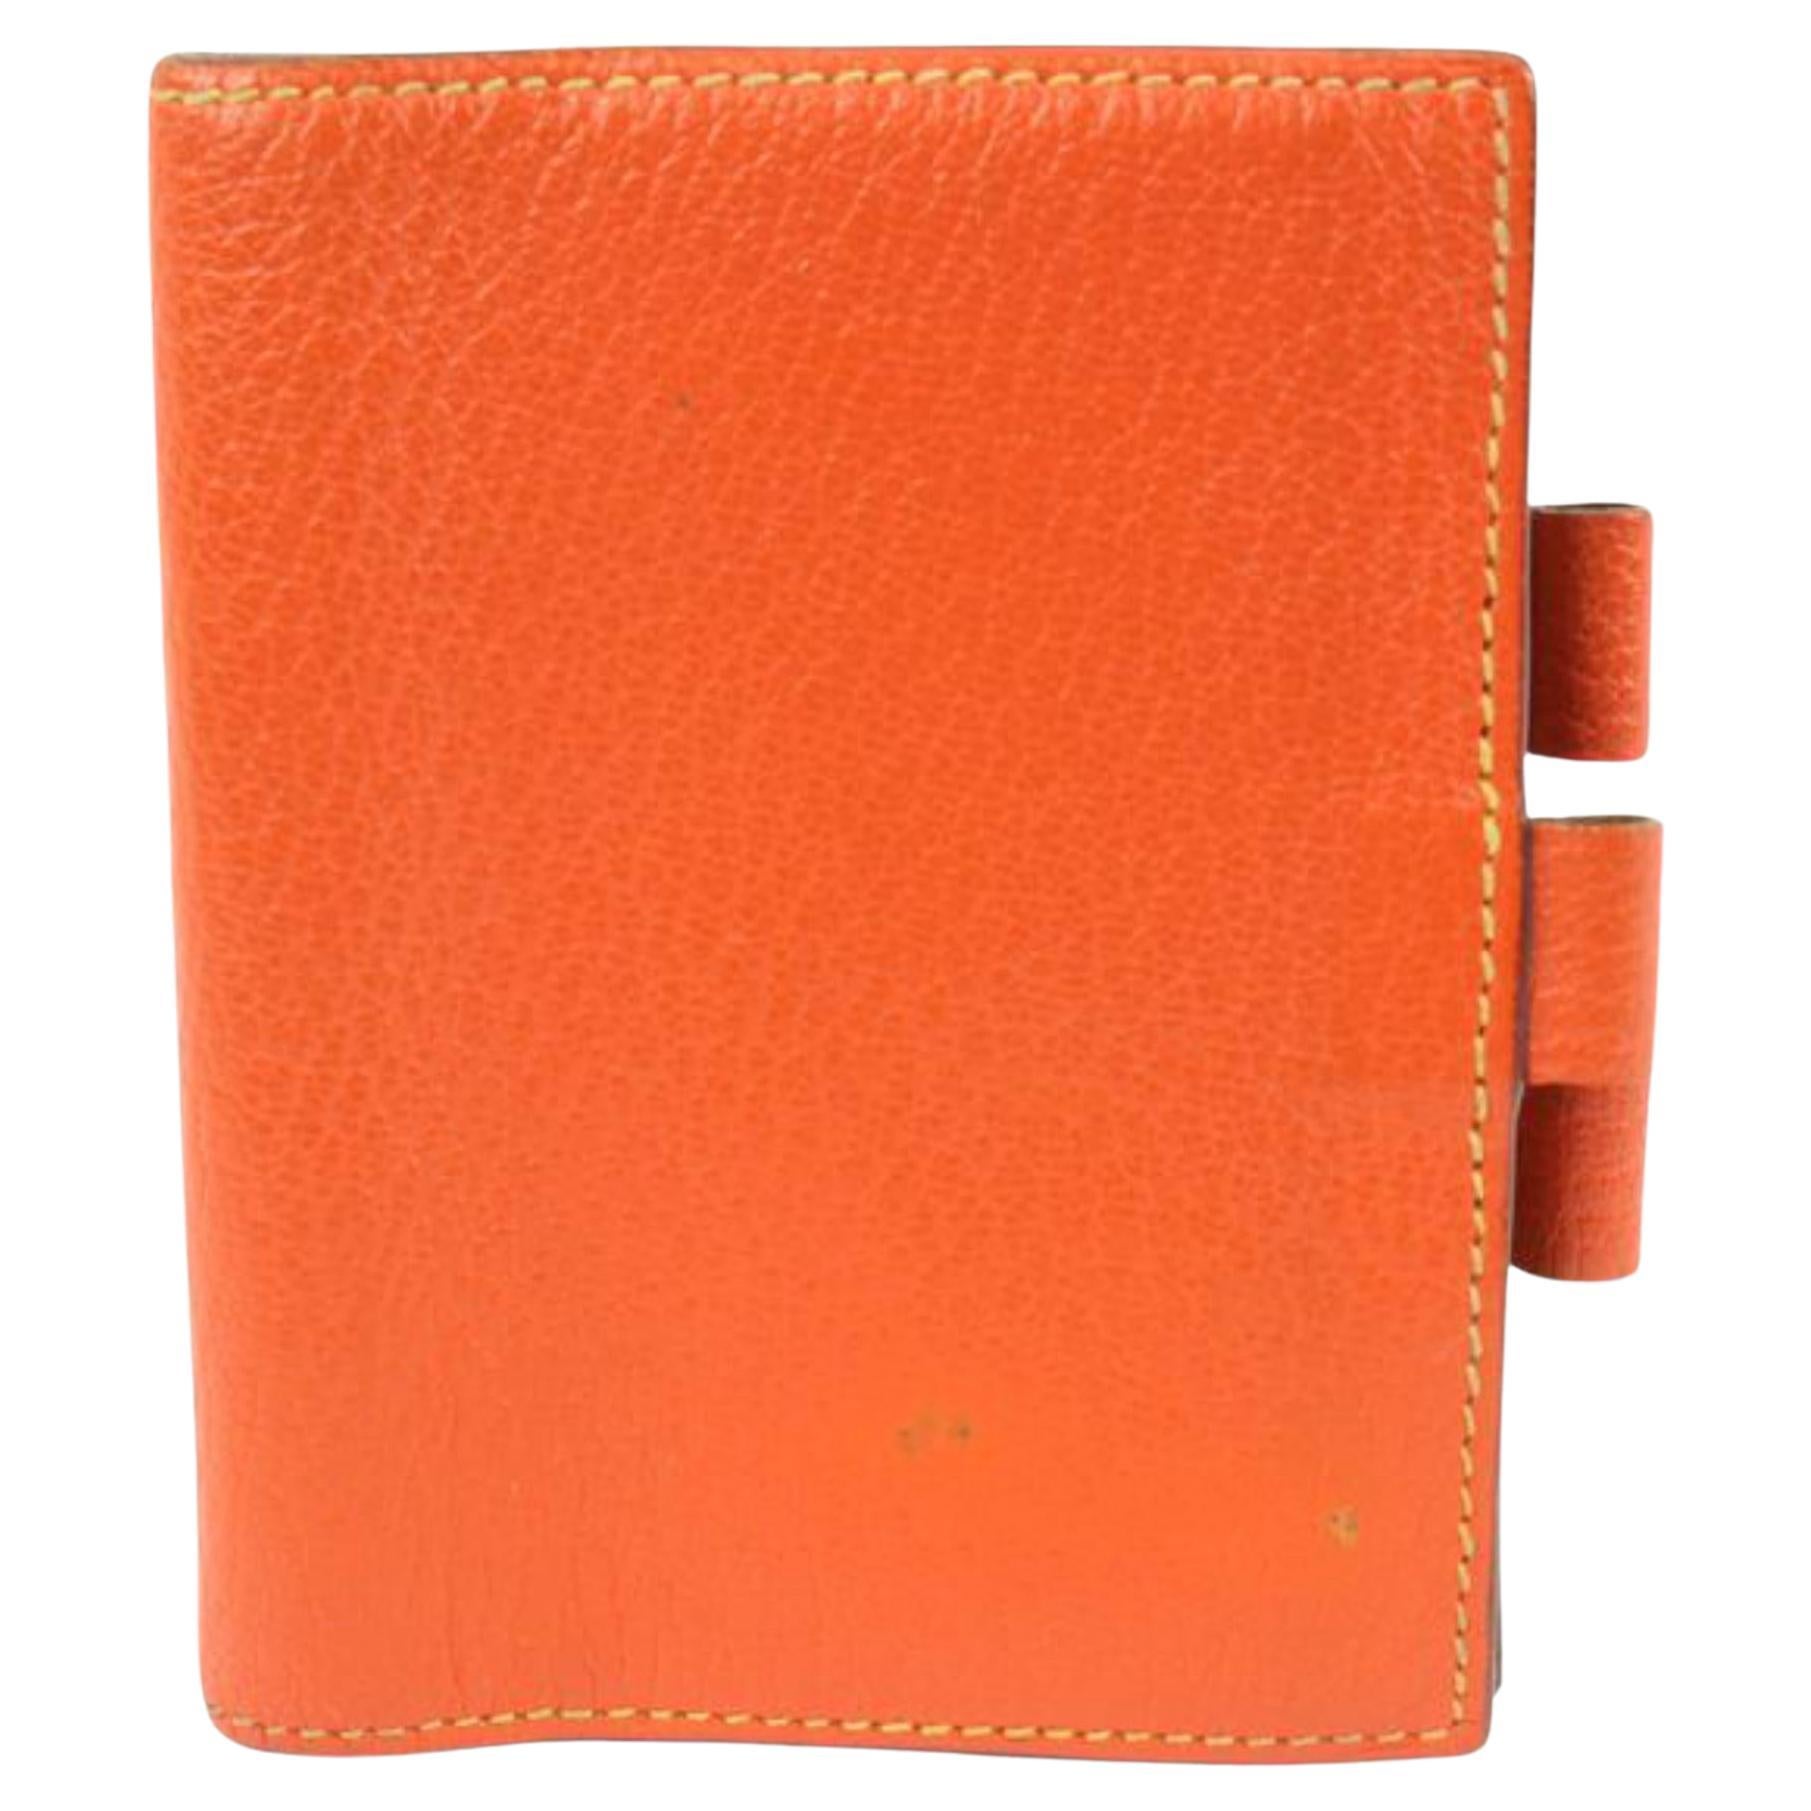 Hermès Orange Leather Globe Trotter Agenda Cover PM 11h426s For Sale